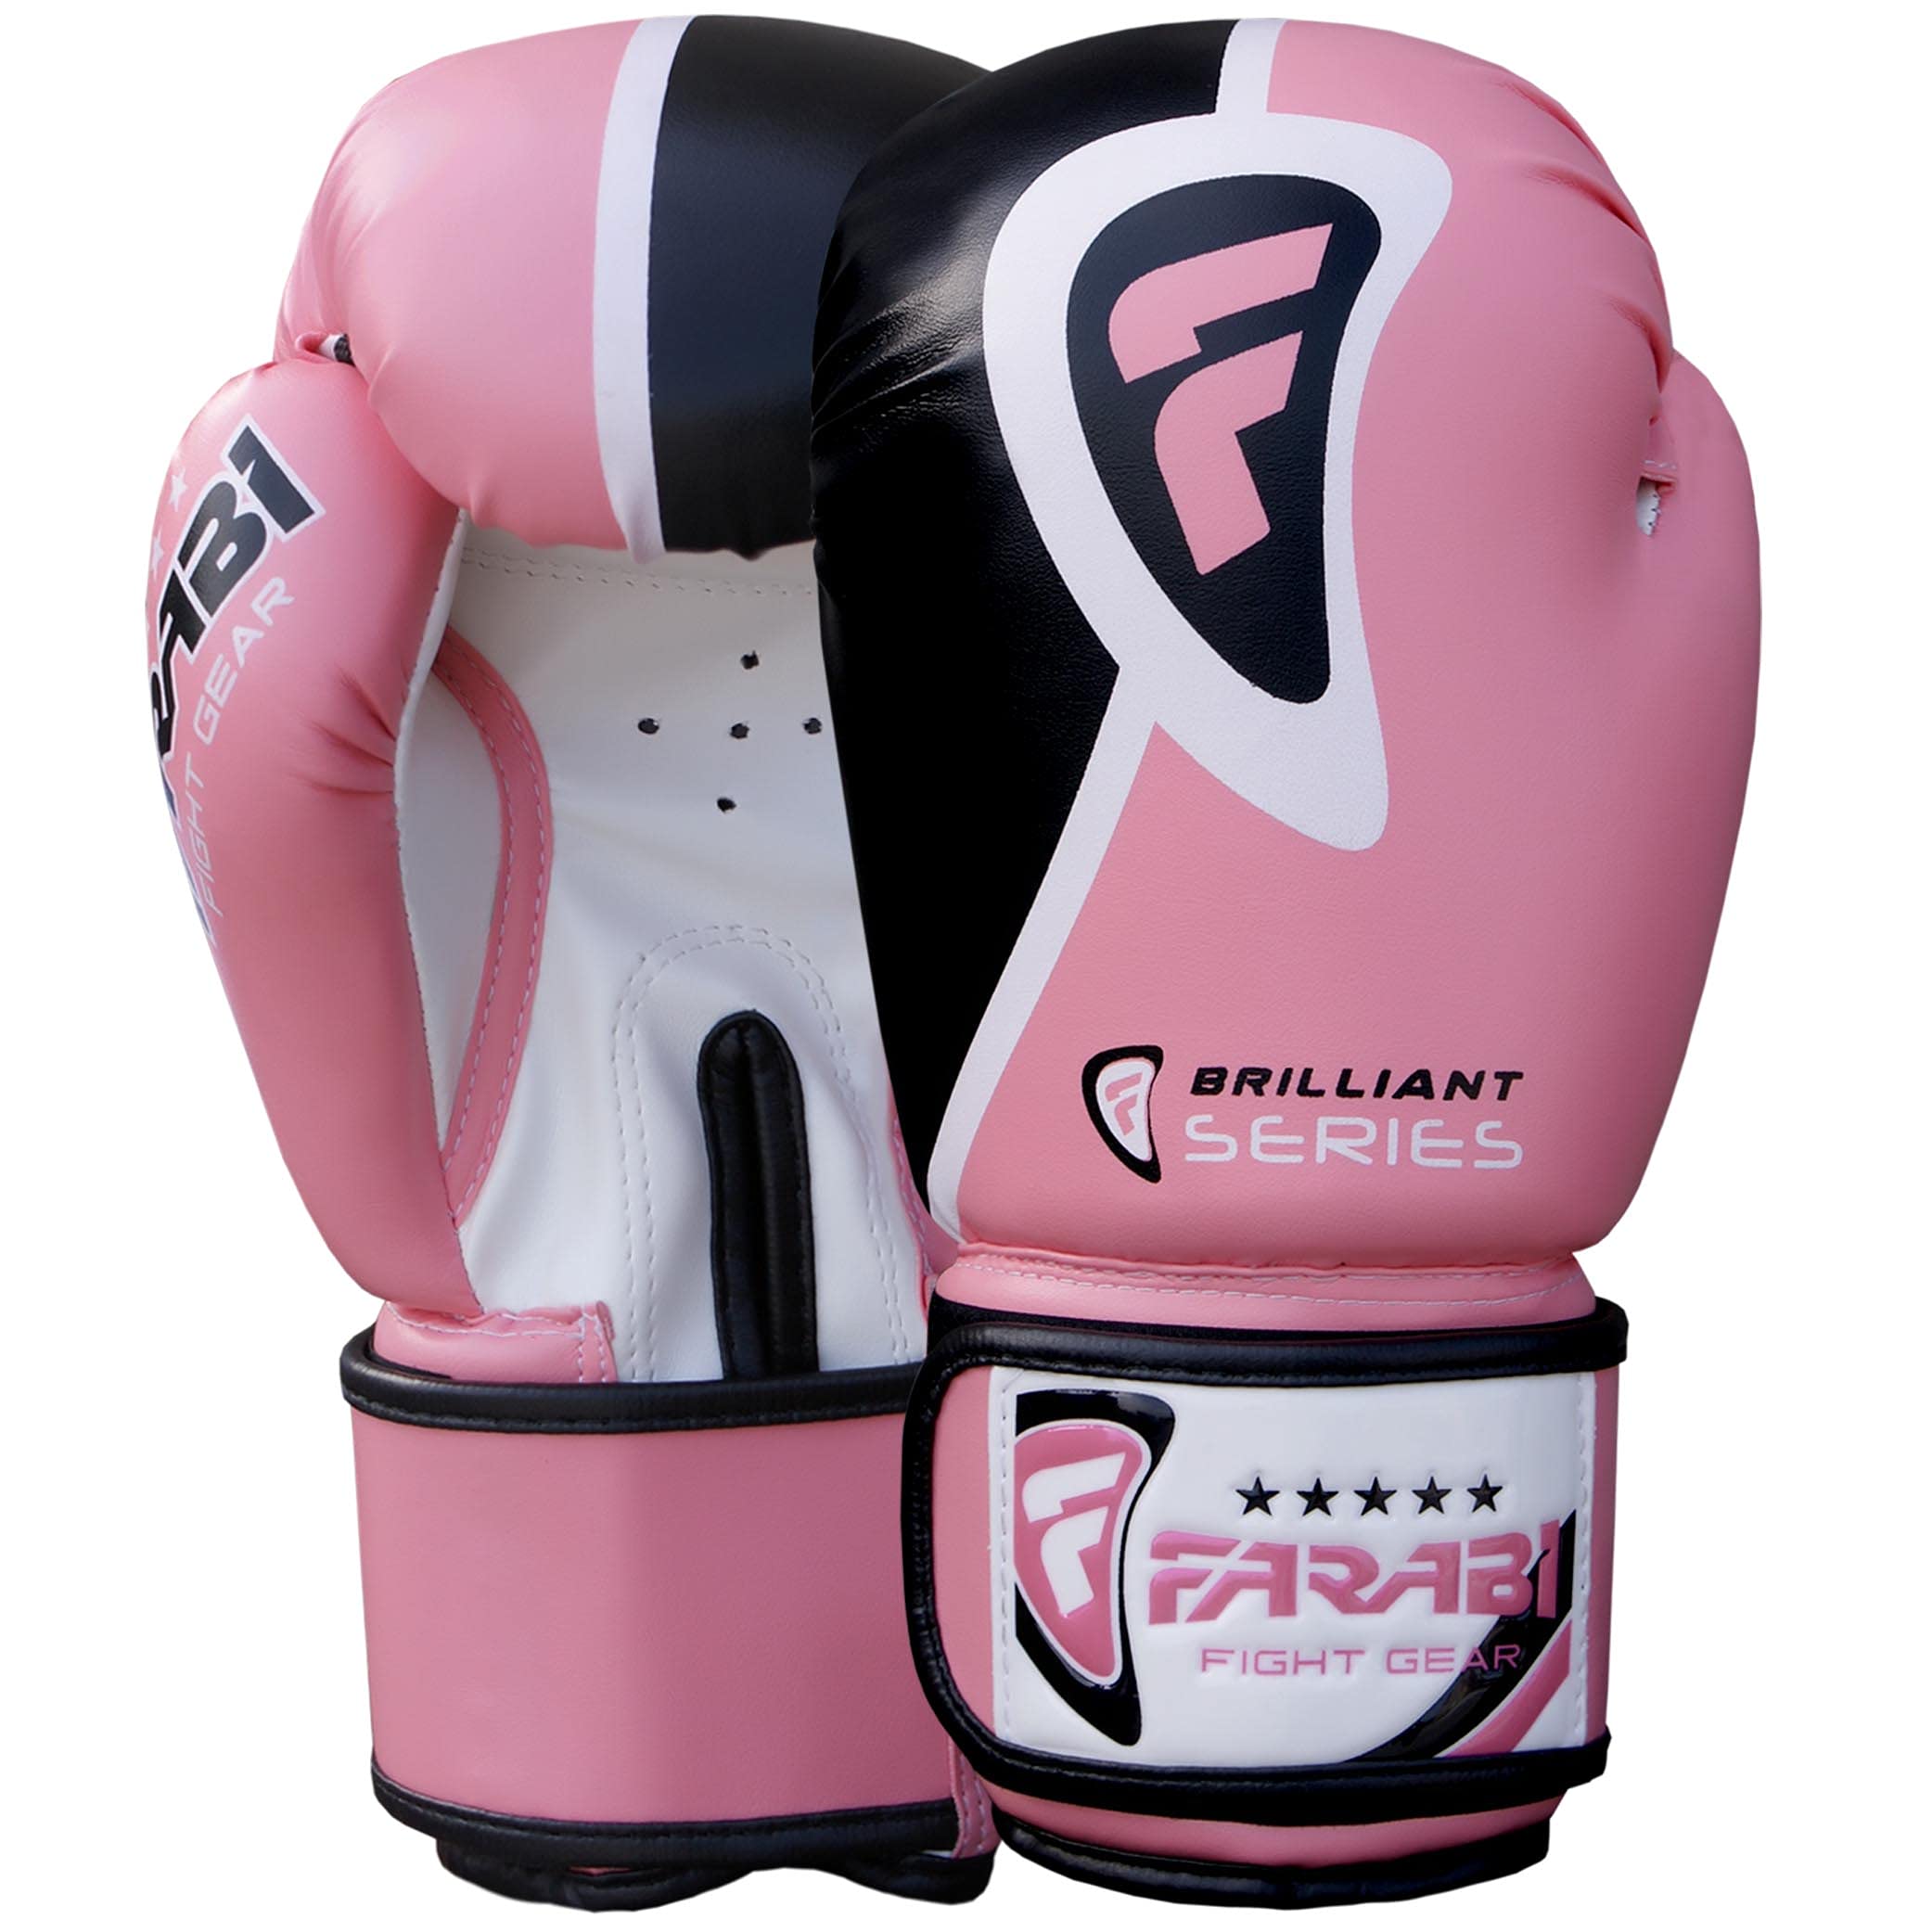 Farabi Sports Boxhandschuhe 10 oz, 12 oz, 14 oz, 16 oz Box Handschuhe für Training, Sparring, Kickboxen, MMA, Muay Thai, Boxhandschuhe männer & Damen Kampf Handschuhe (Pink Brilliant, 16-oz)